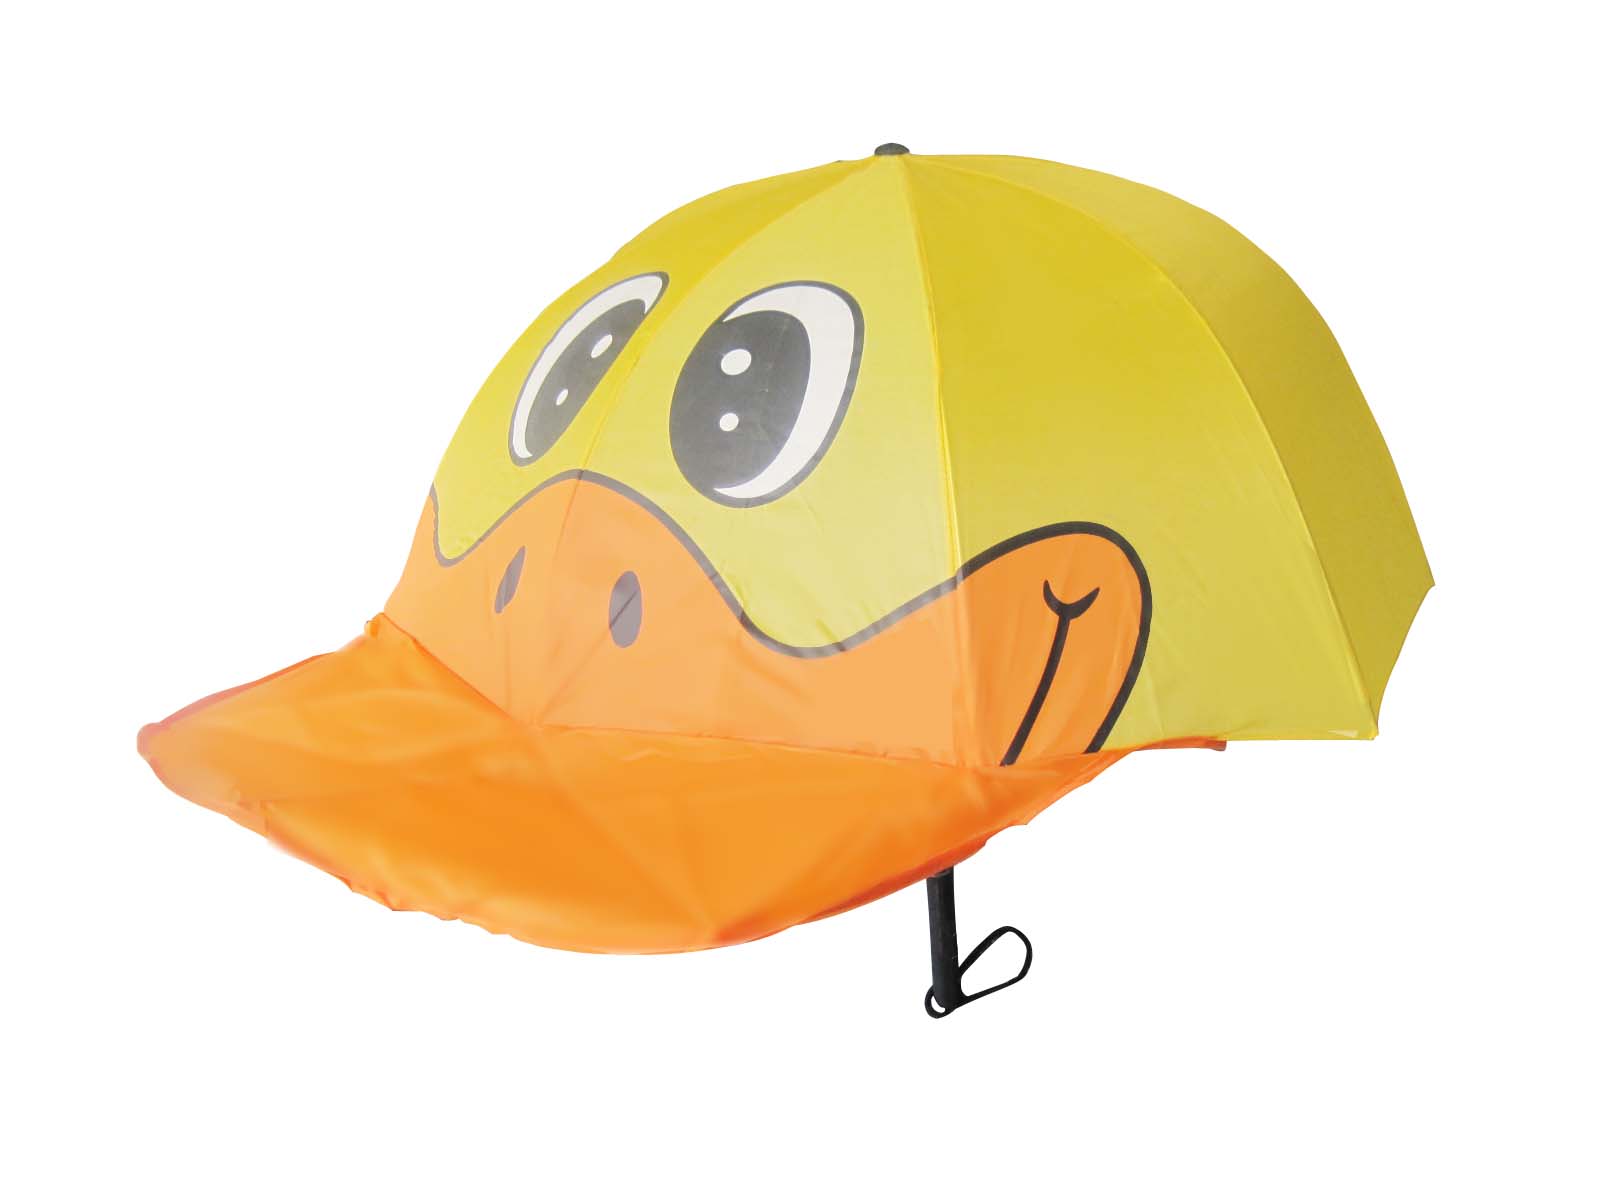 Duck Umbrella For Umbrella